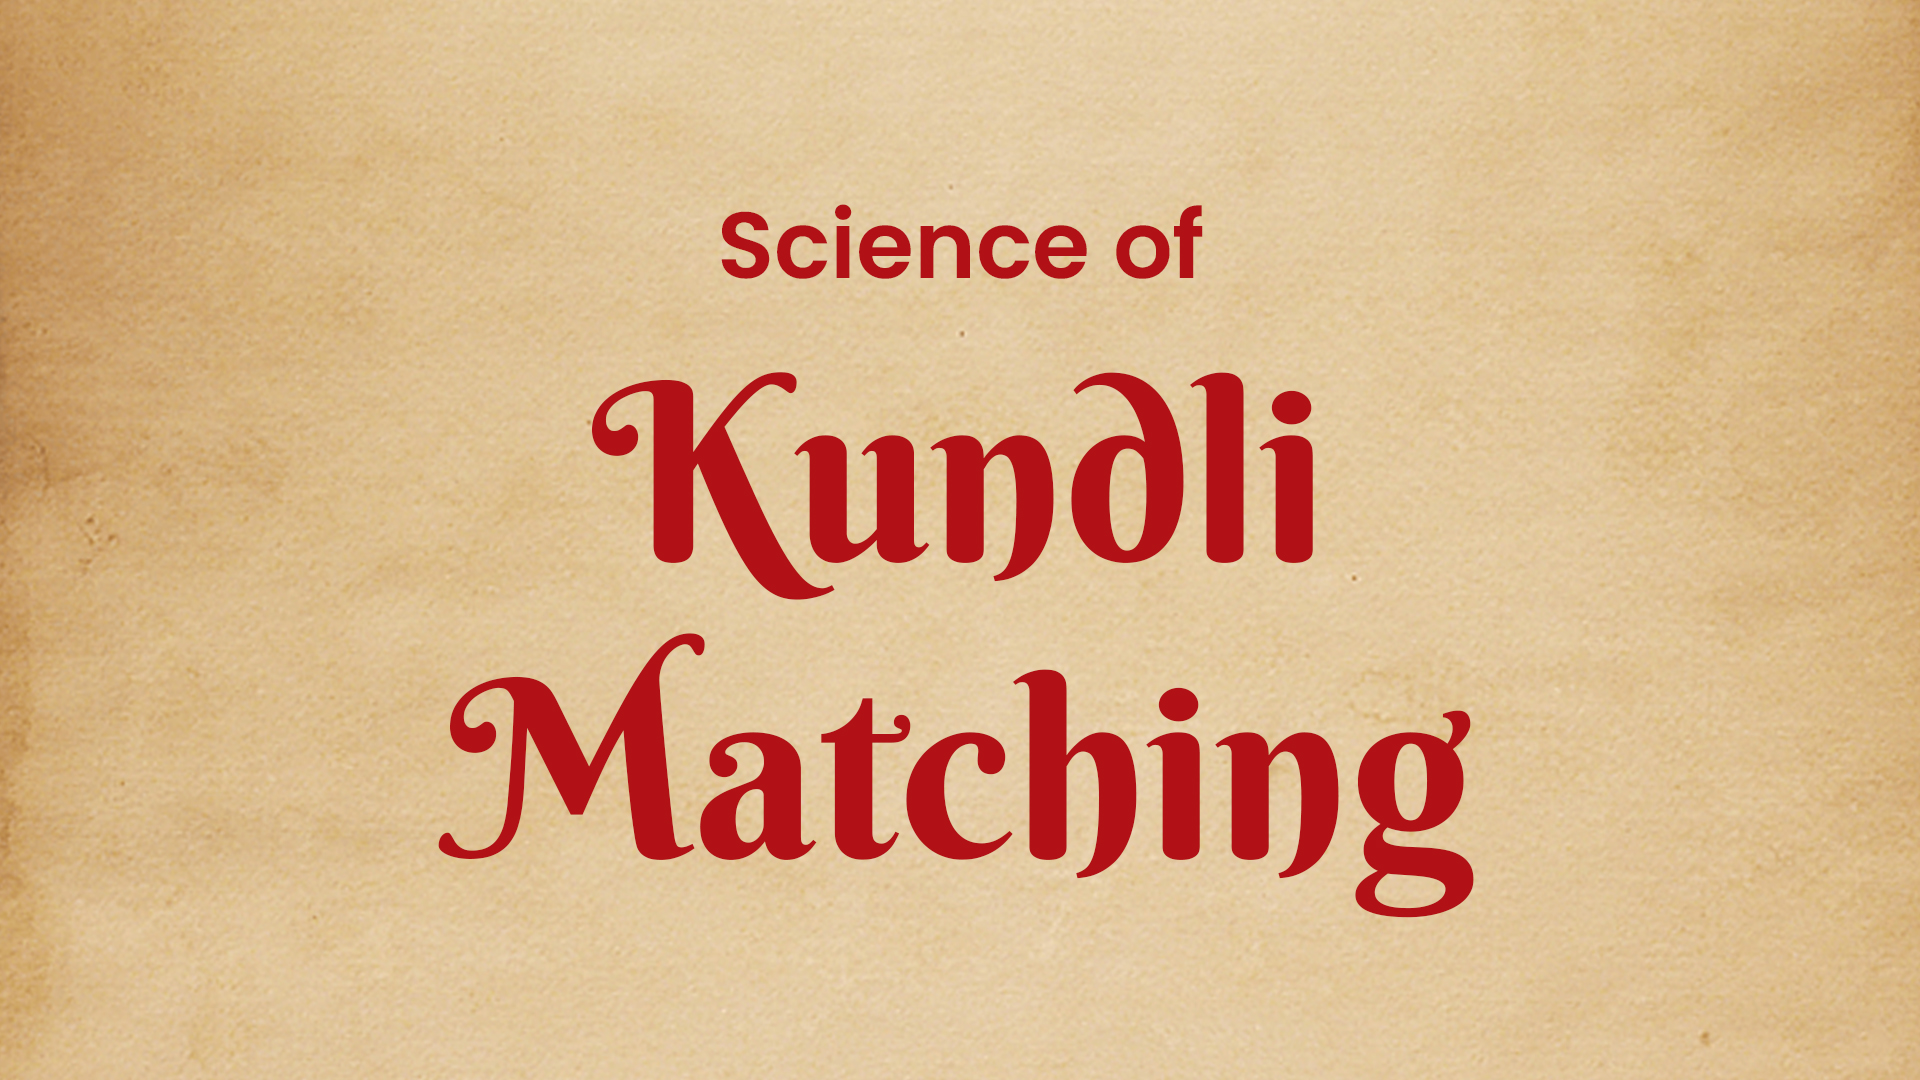 Science of Kundli Matching